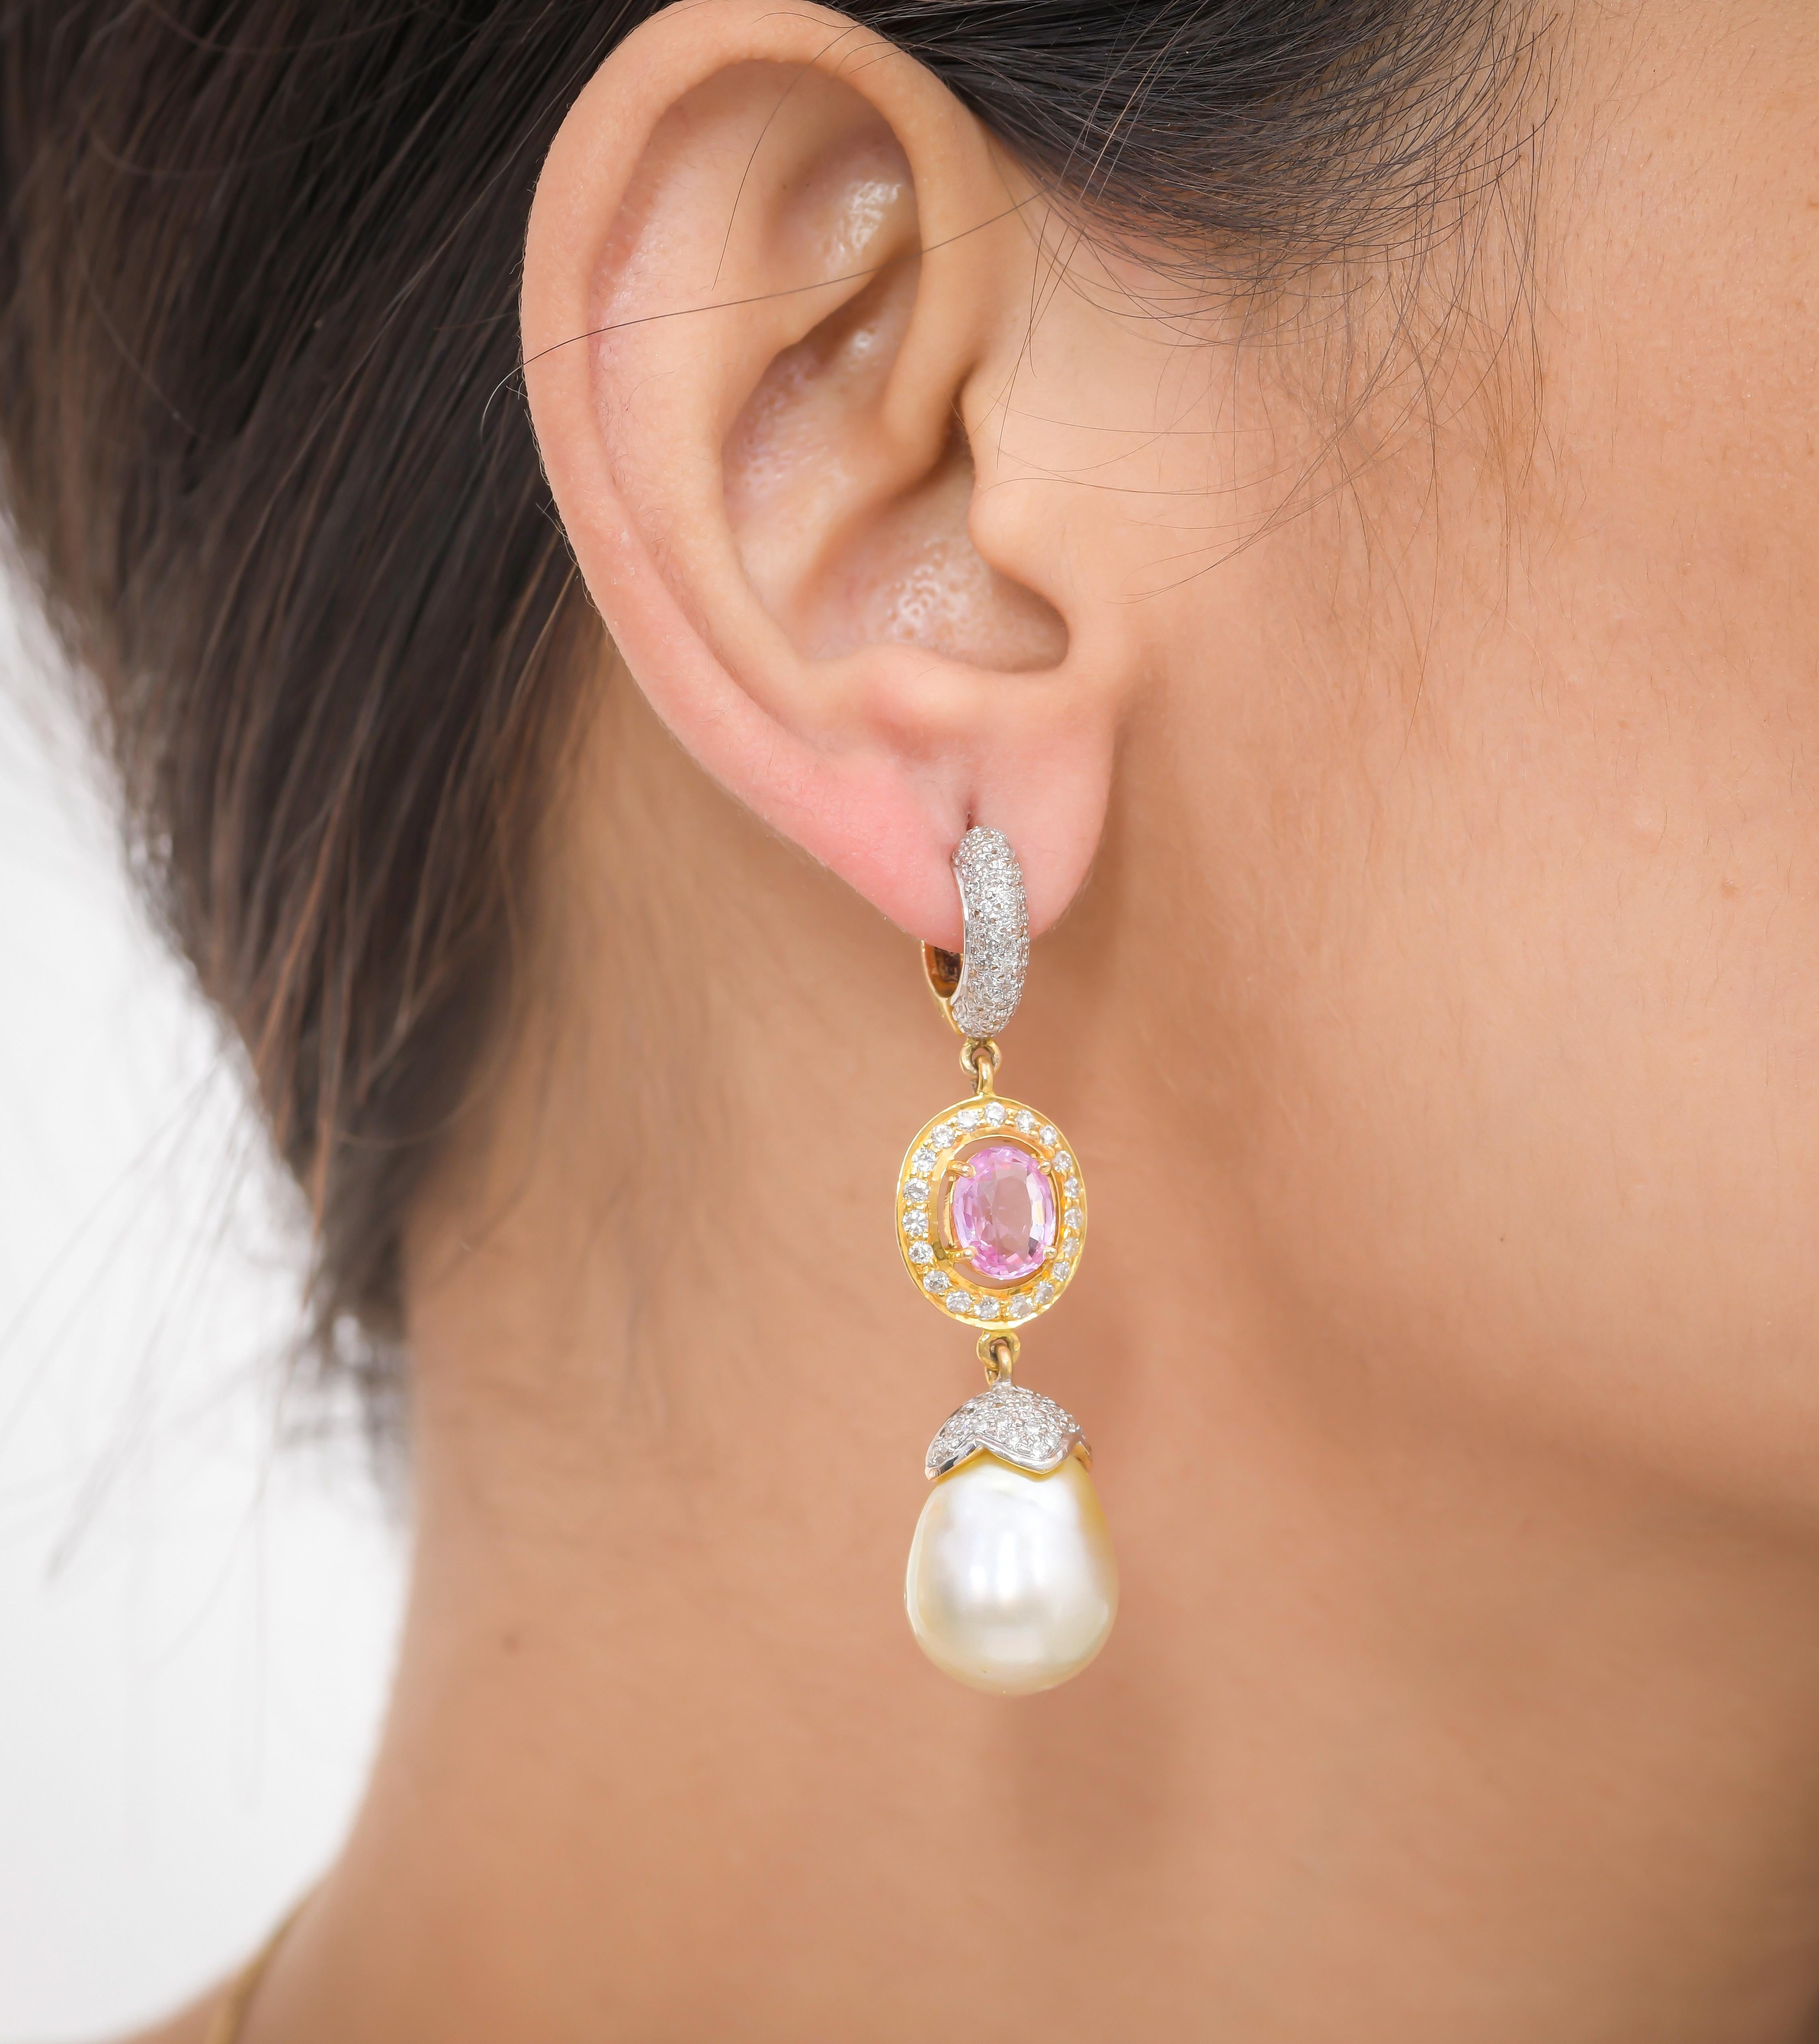 Oval Cut 3.14 Carat Pink Sapphire South Sea Pearl Diamond 18 Karat Yellow Gold Earrings For Sale